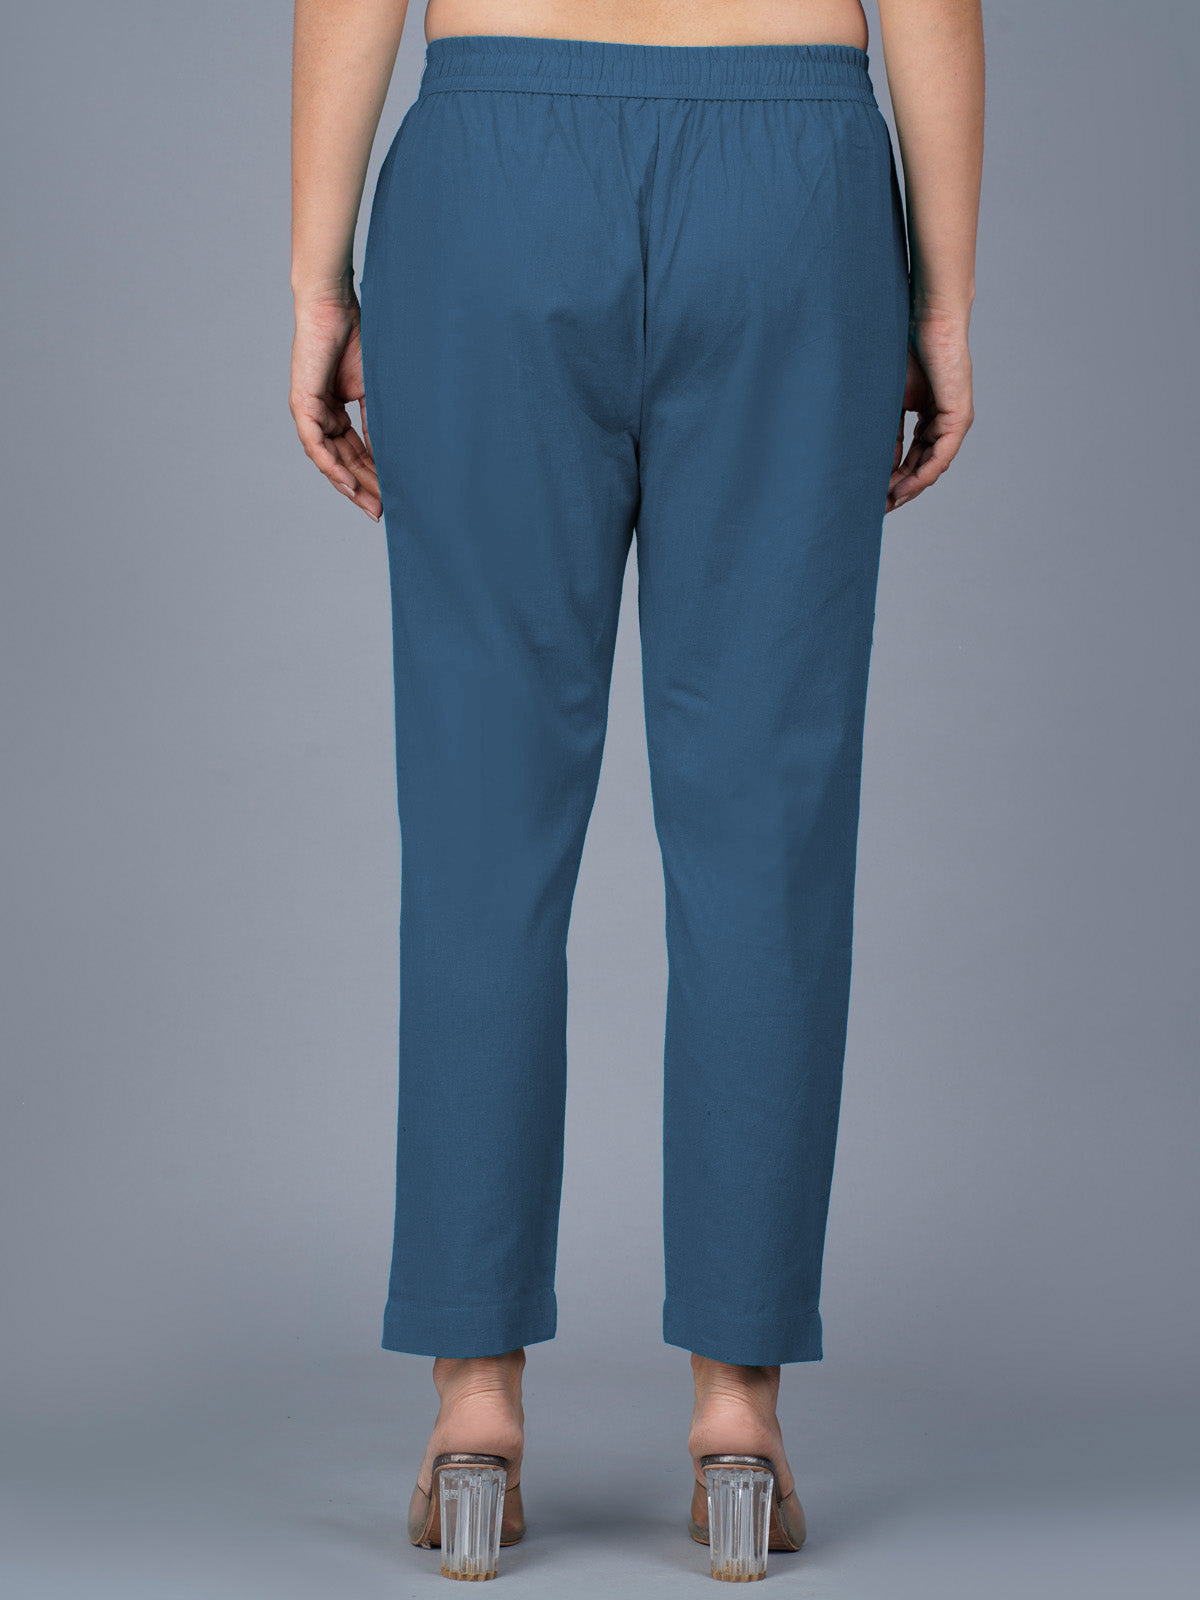 Women's Teal-Blue Regular Fit Elastic Cotton Trouser